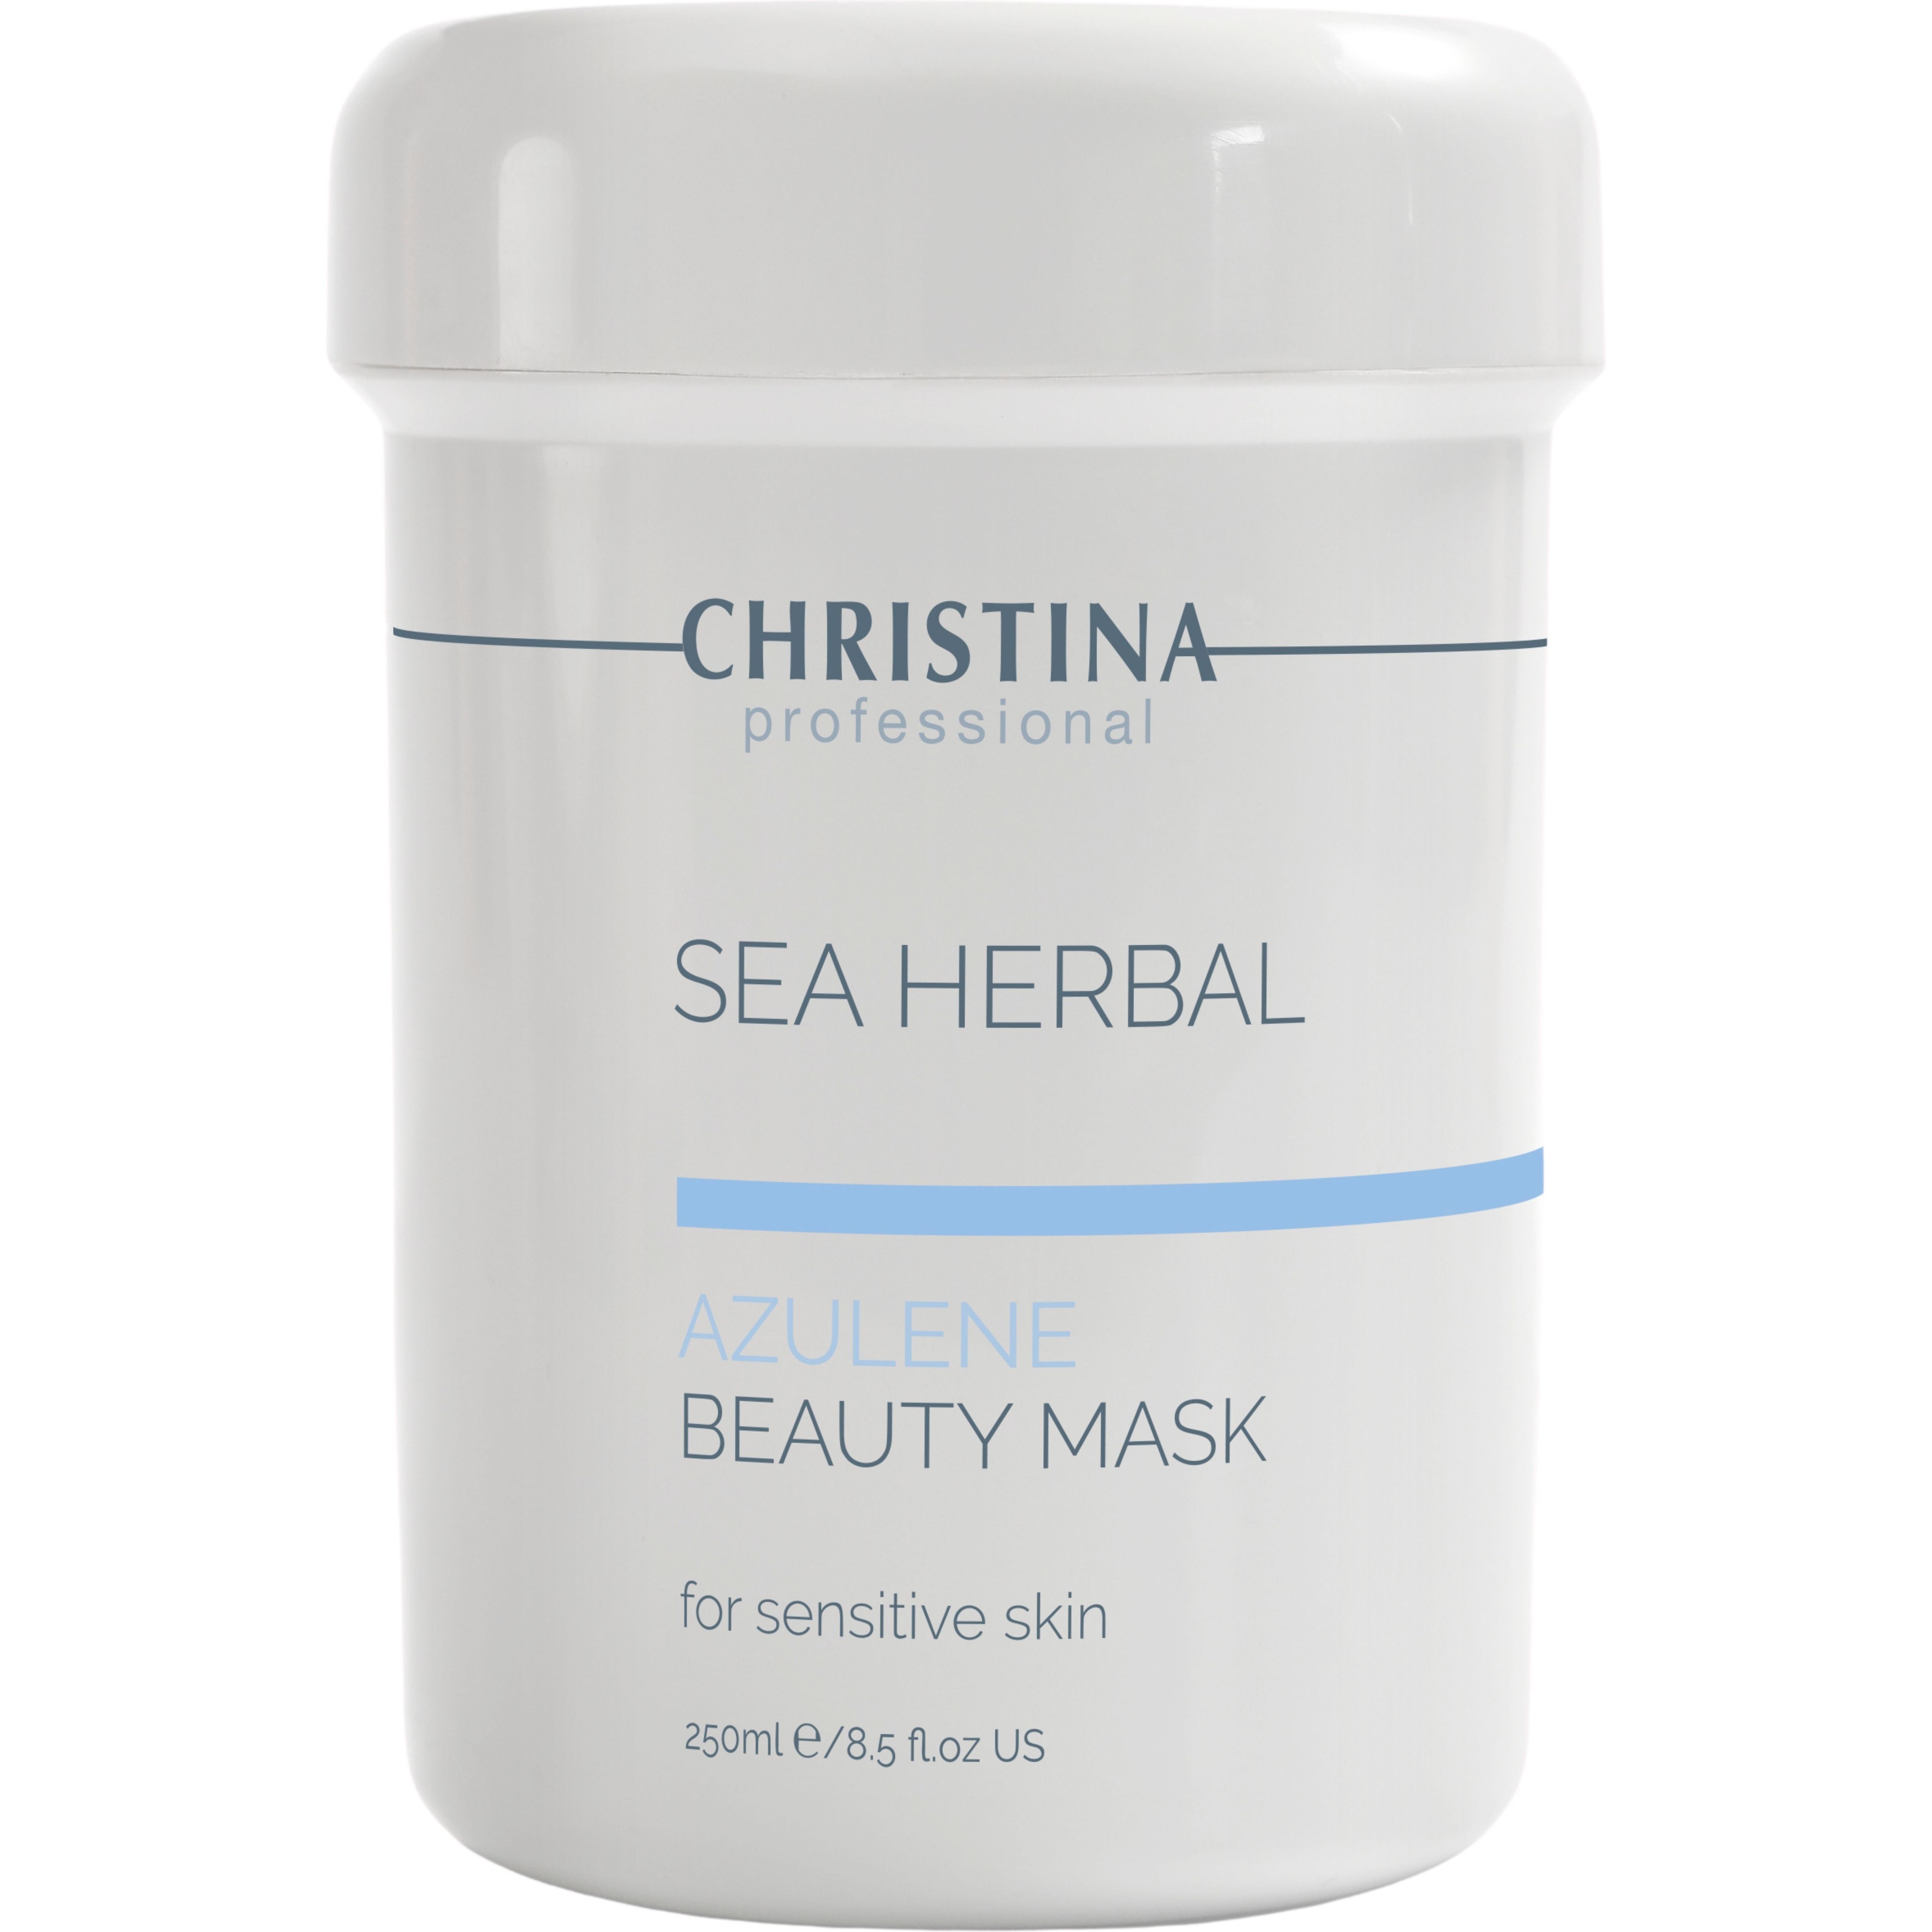 Азуленовая маска красоты для чувствительной кожи Christina Sea Herbal Beauty Mask Azulene For Sensitive Skin, 250 мл - фото 1